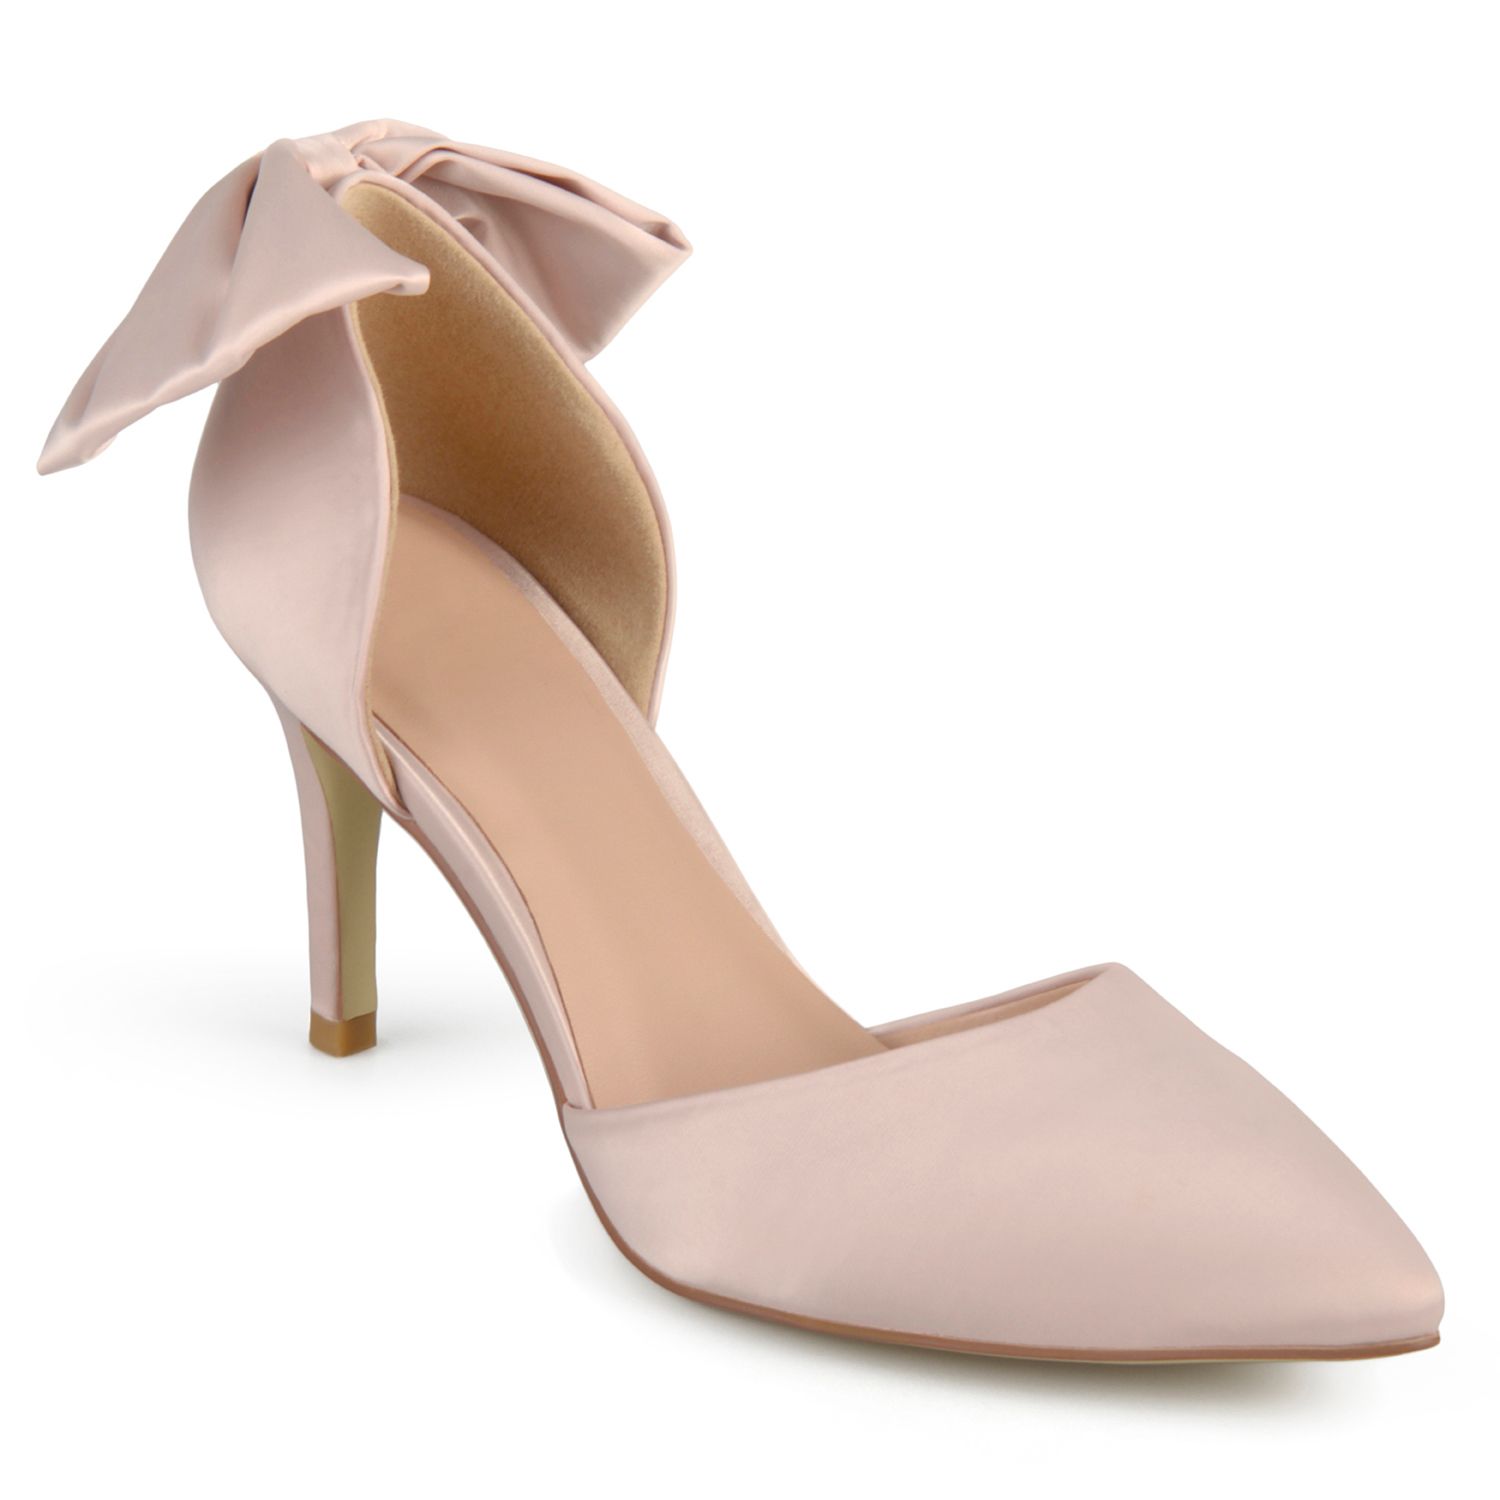 pink heels size 11